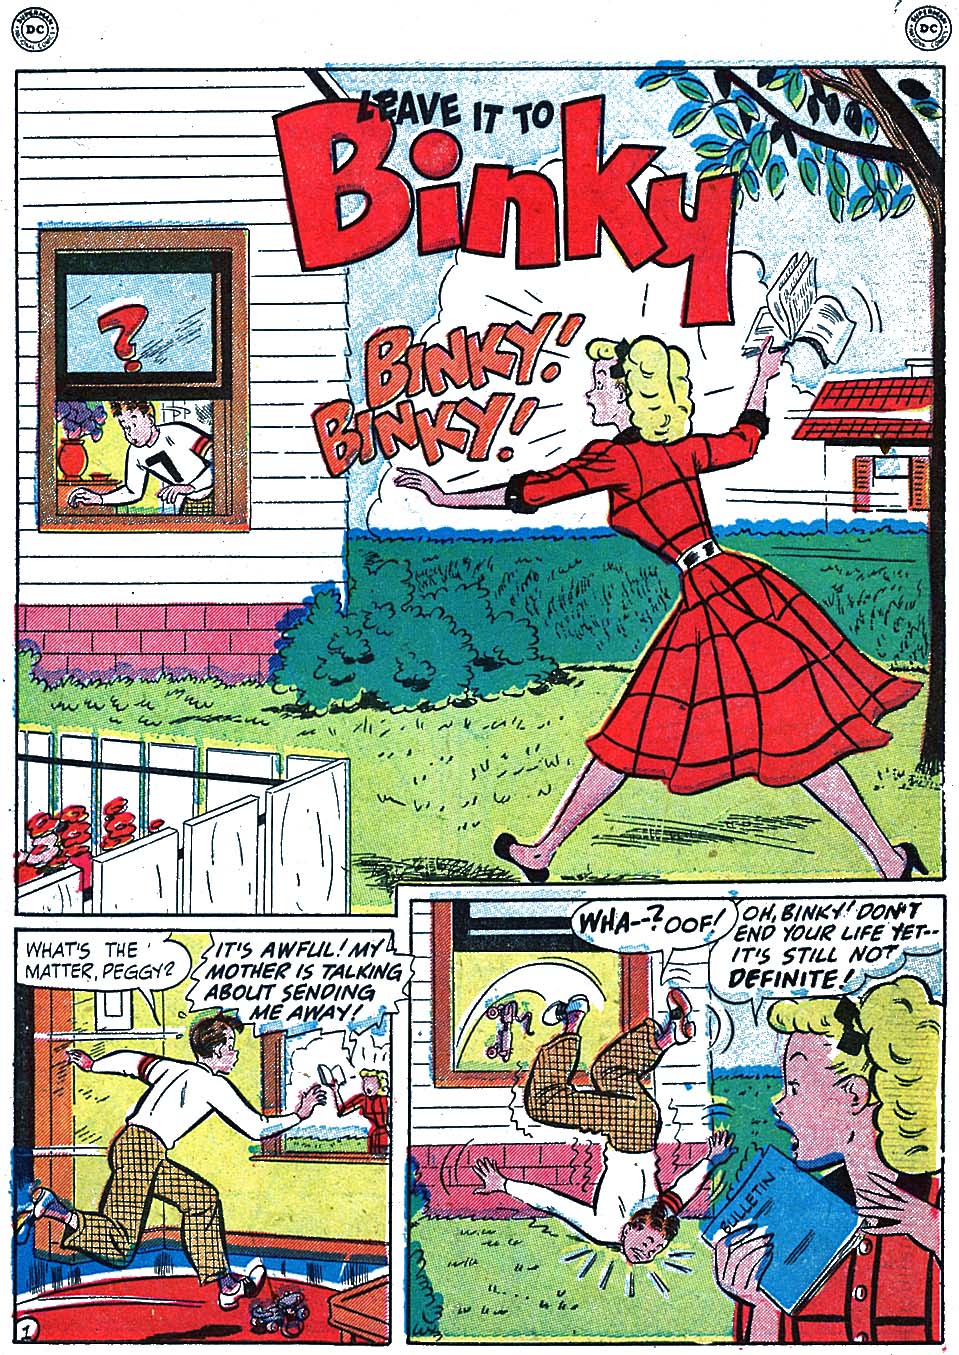 Read online Leave it to Binky comic -  Issue #19 - 3